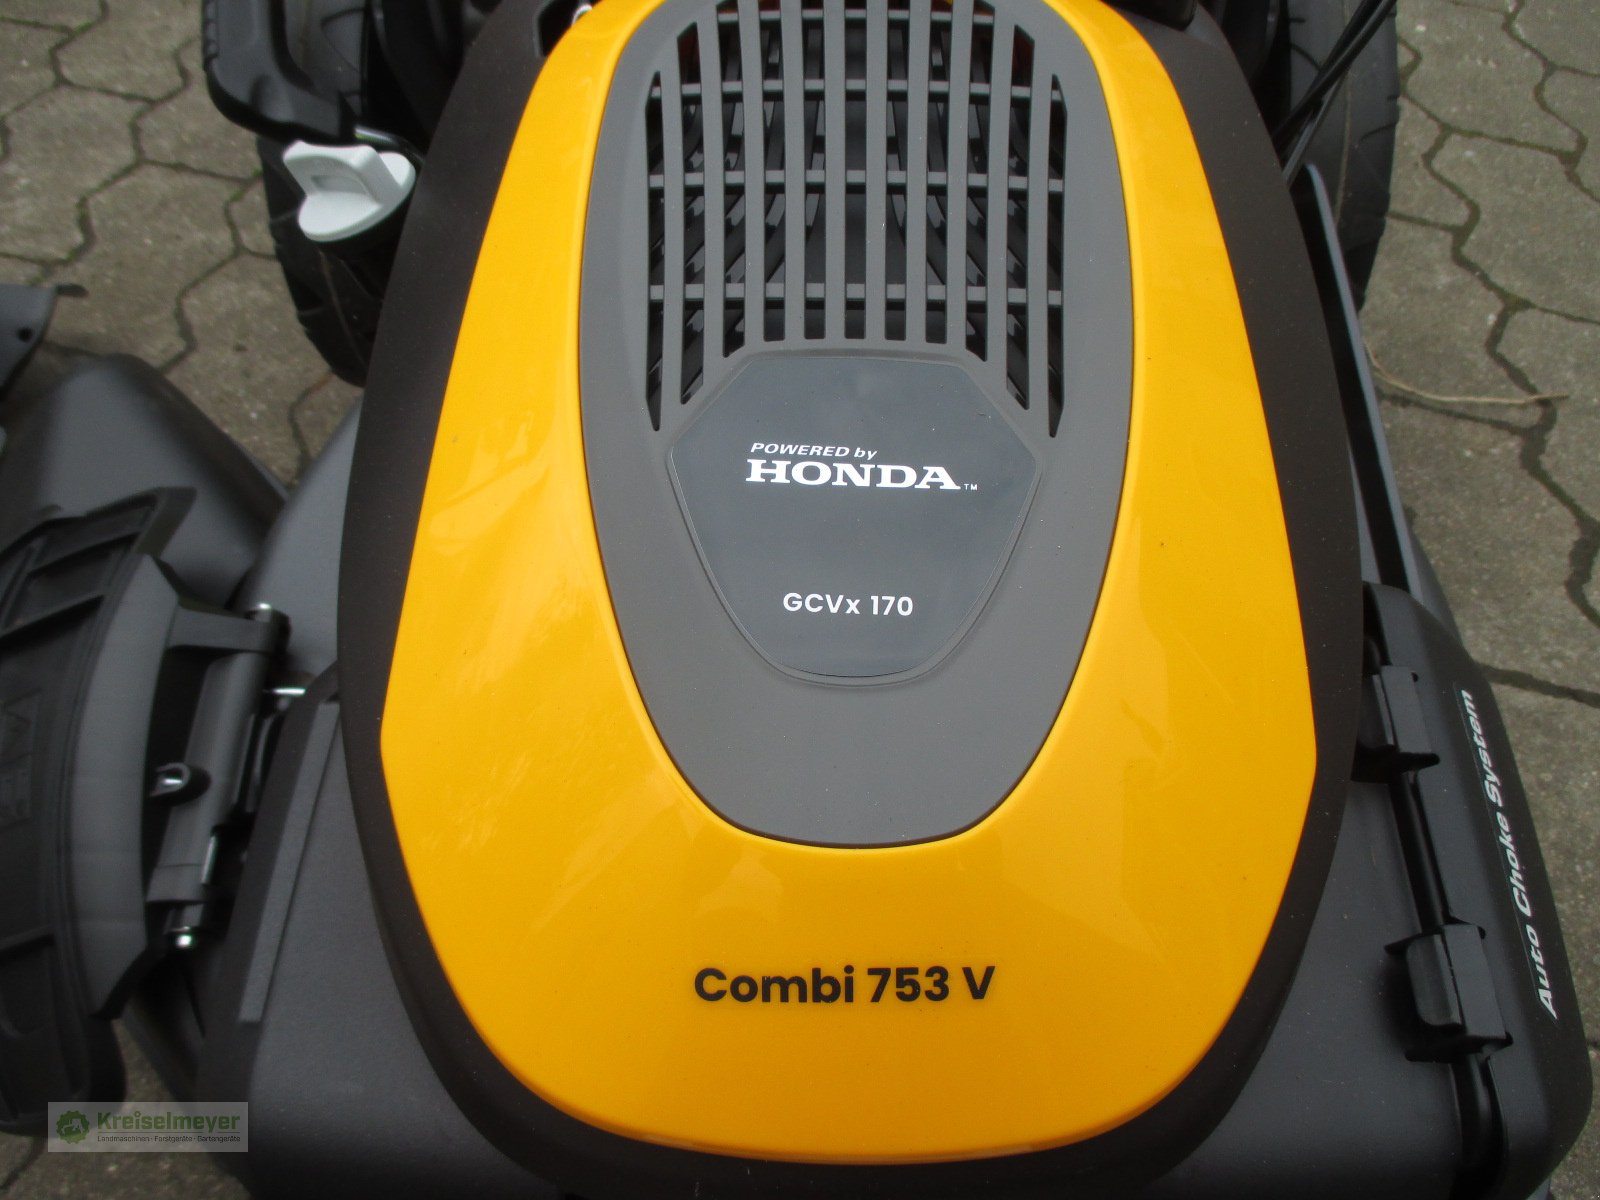 Rasenmäher des Typs Stiga Combi 753 V mit Hondamotor GCVx170, Neumaschine in Feuchtwangen (Bild 5)